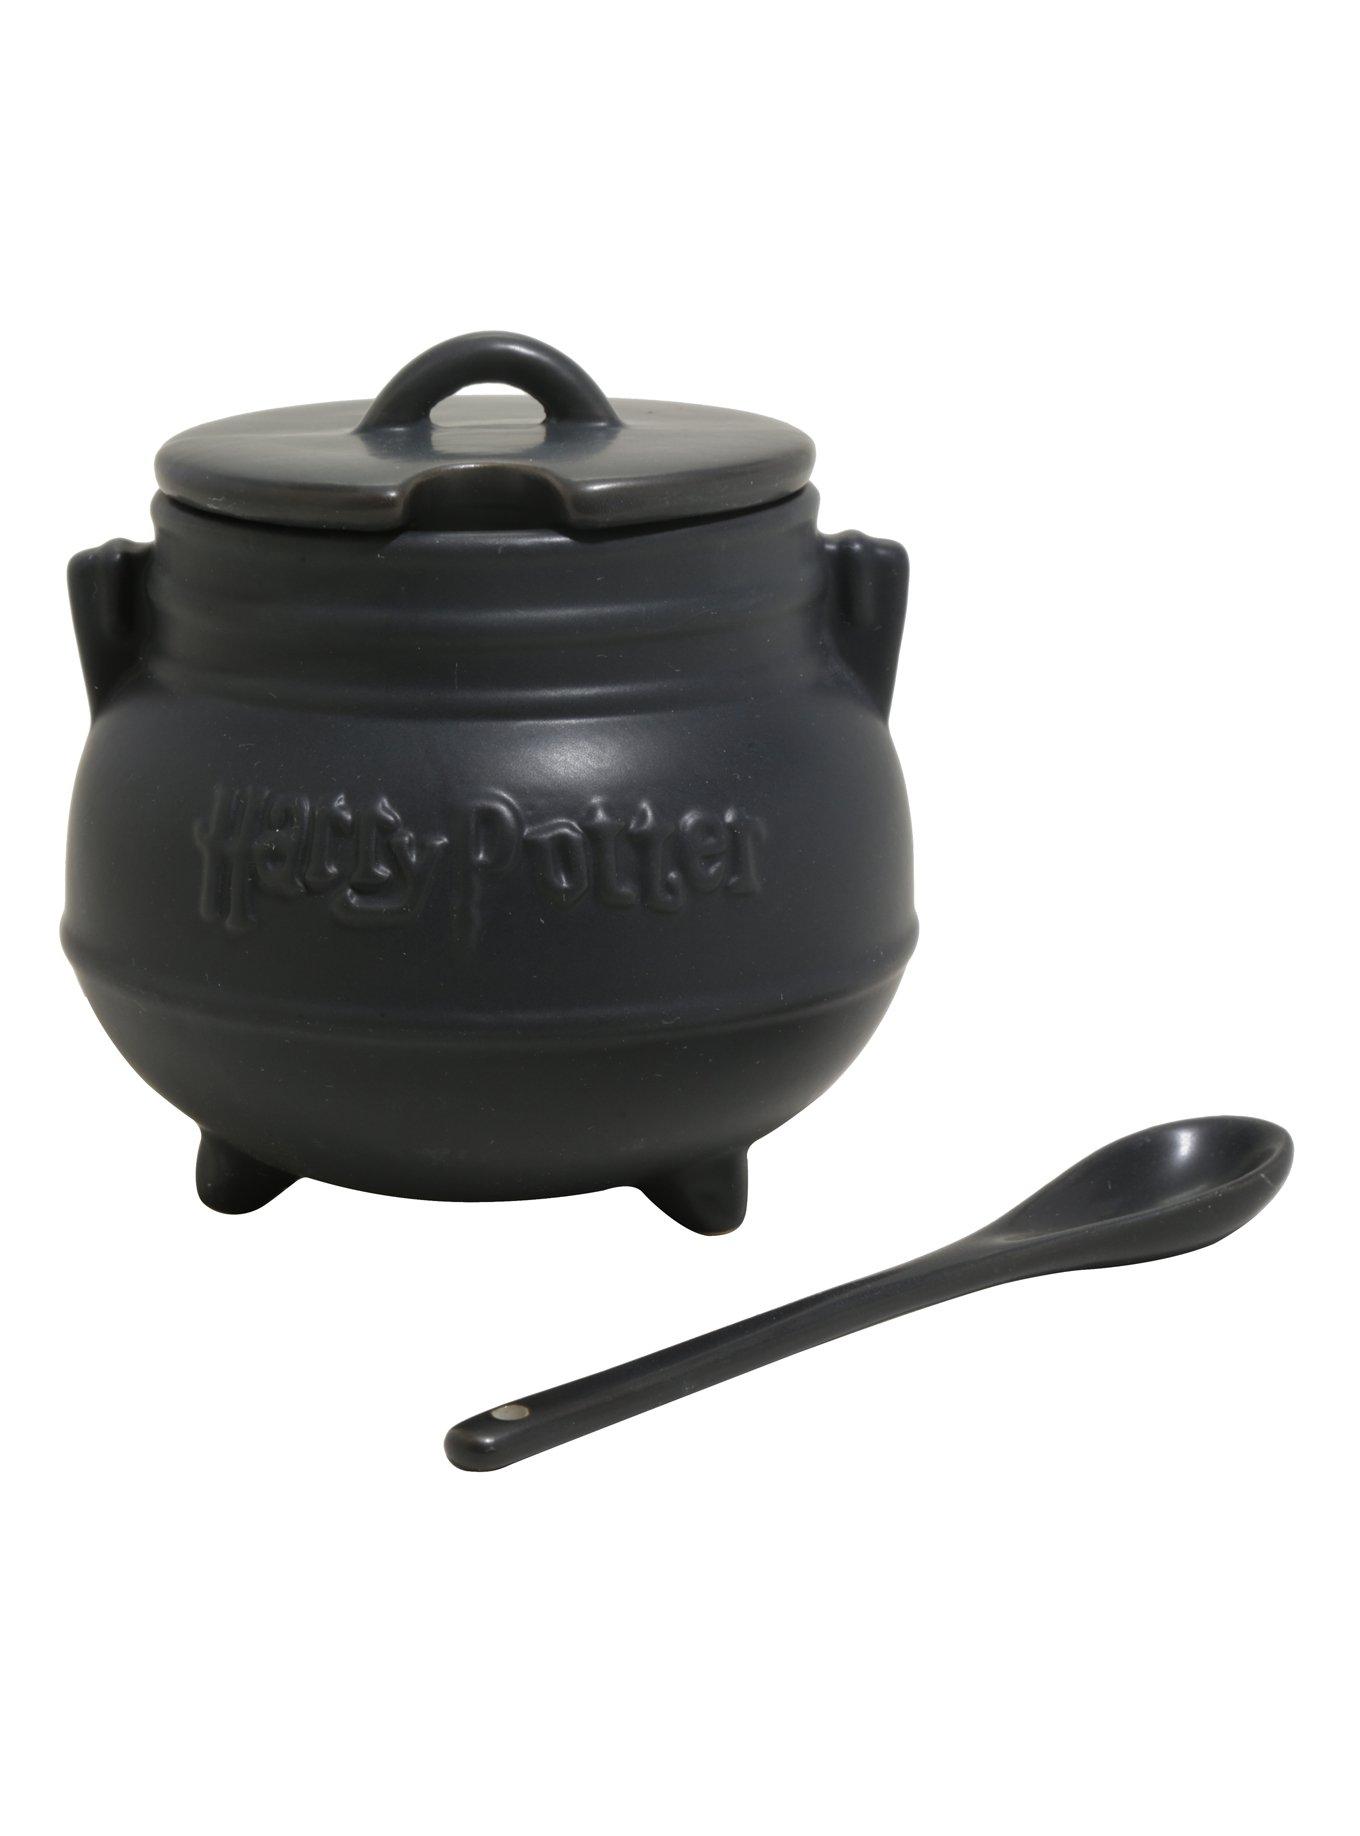 Harry Potter Cauldron Soup/Mug with Spoon and Lid-Read description!